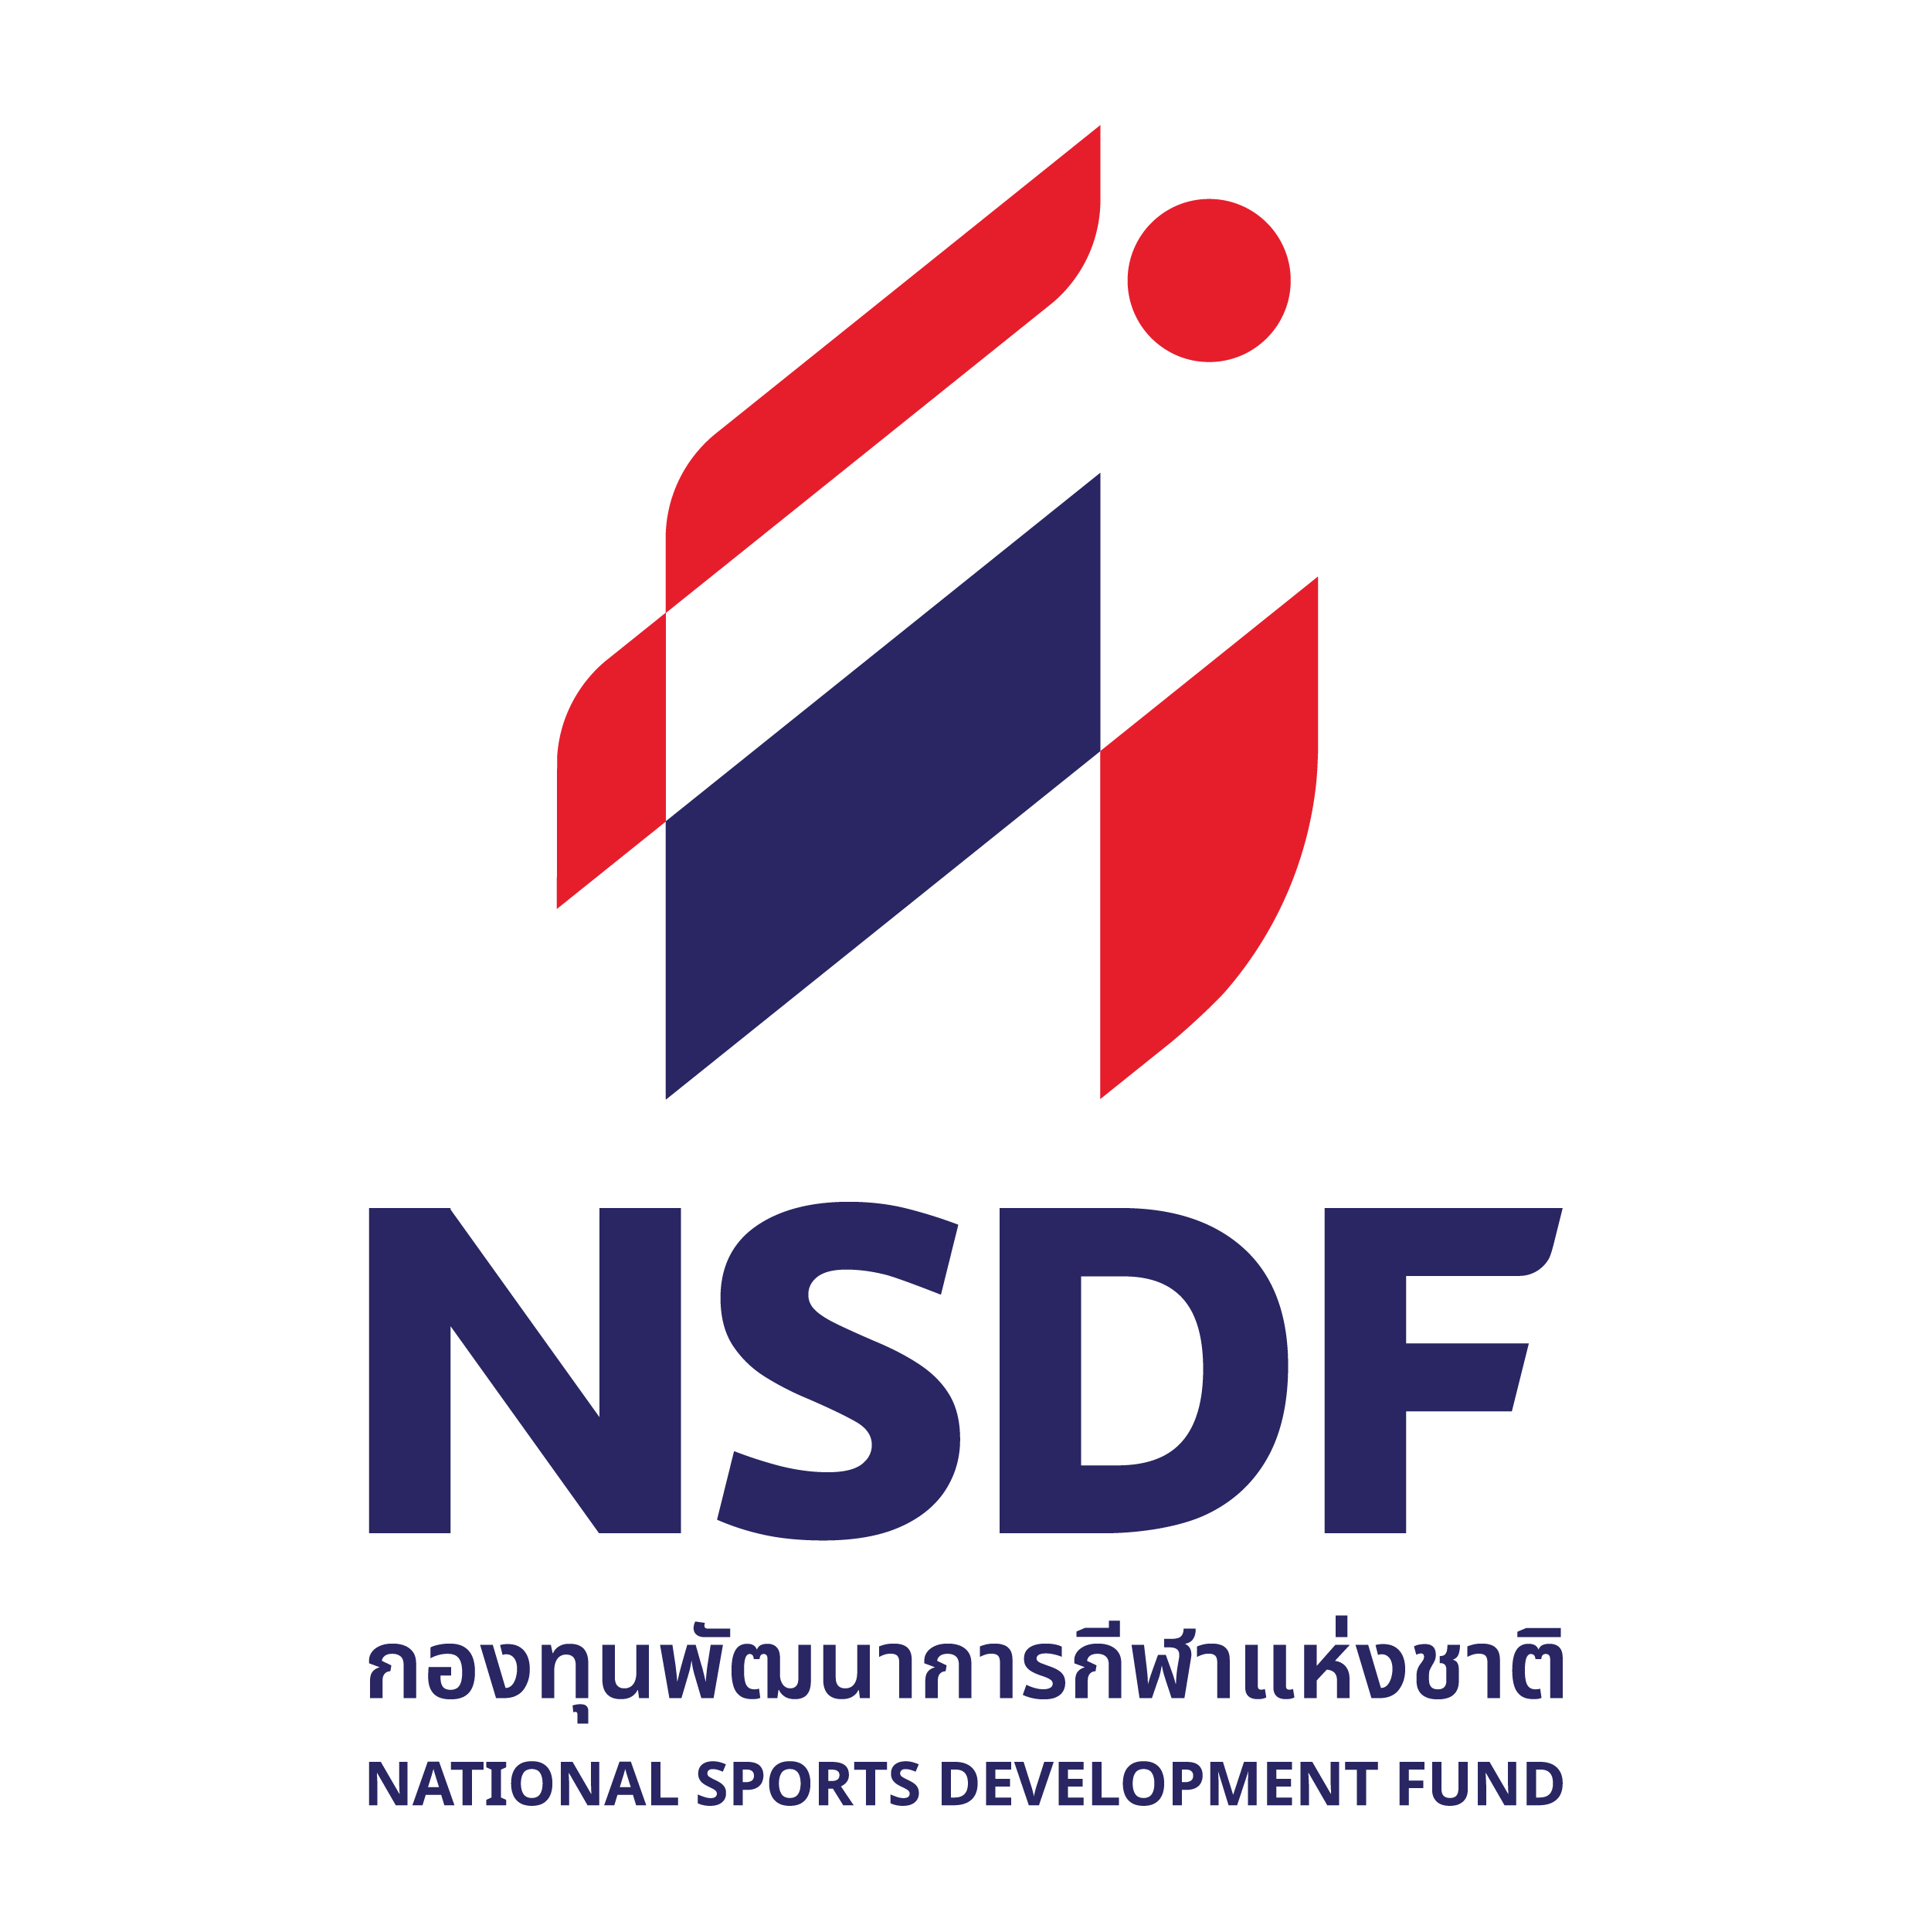 National Sports Development Fund